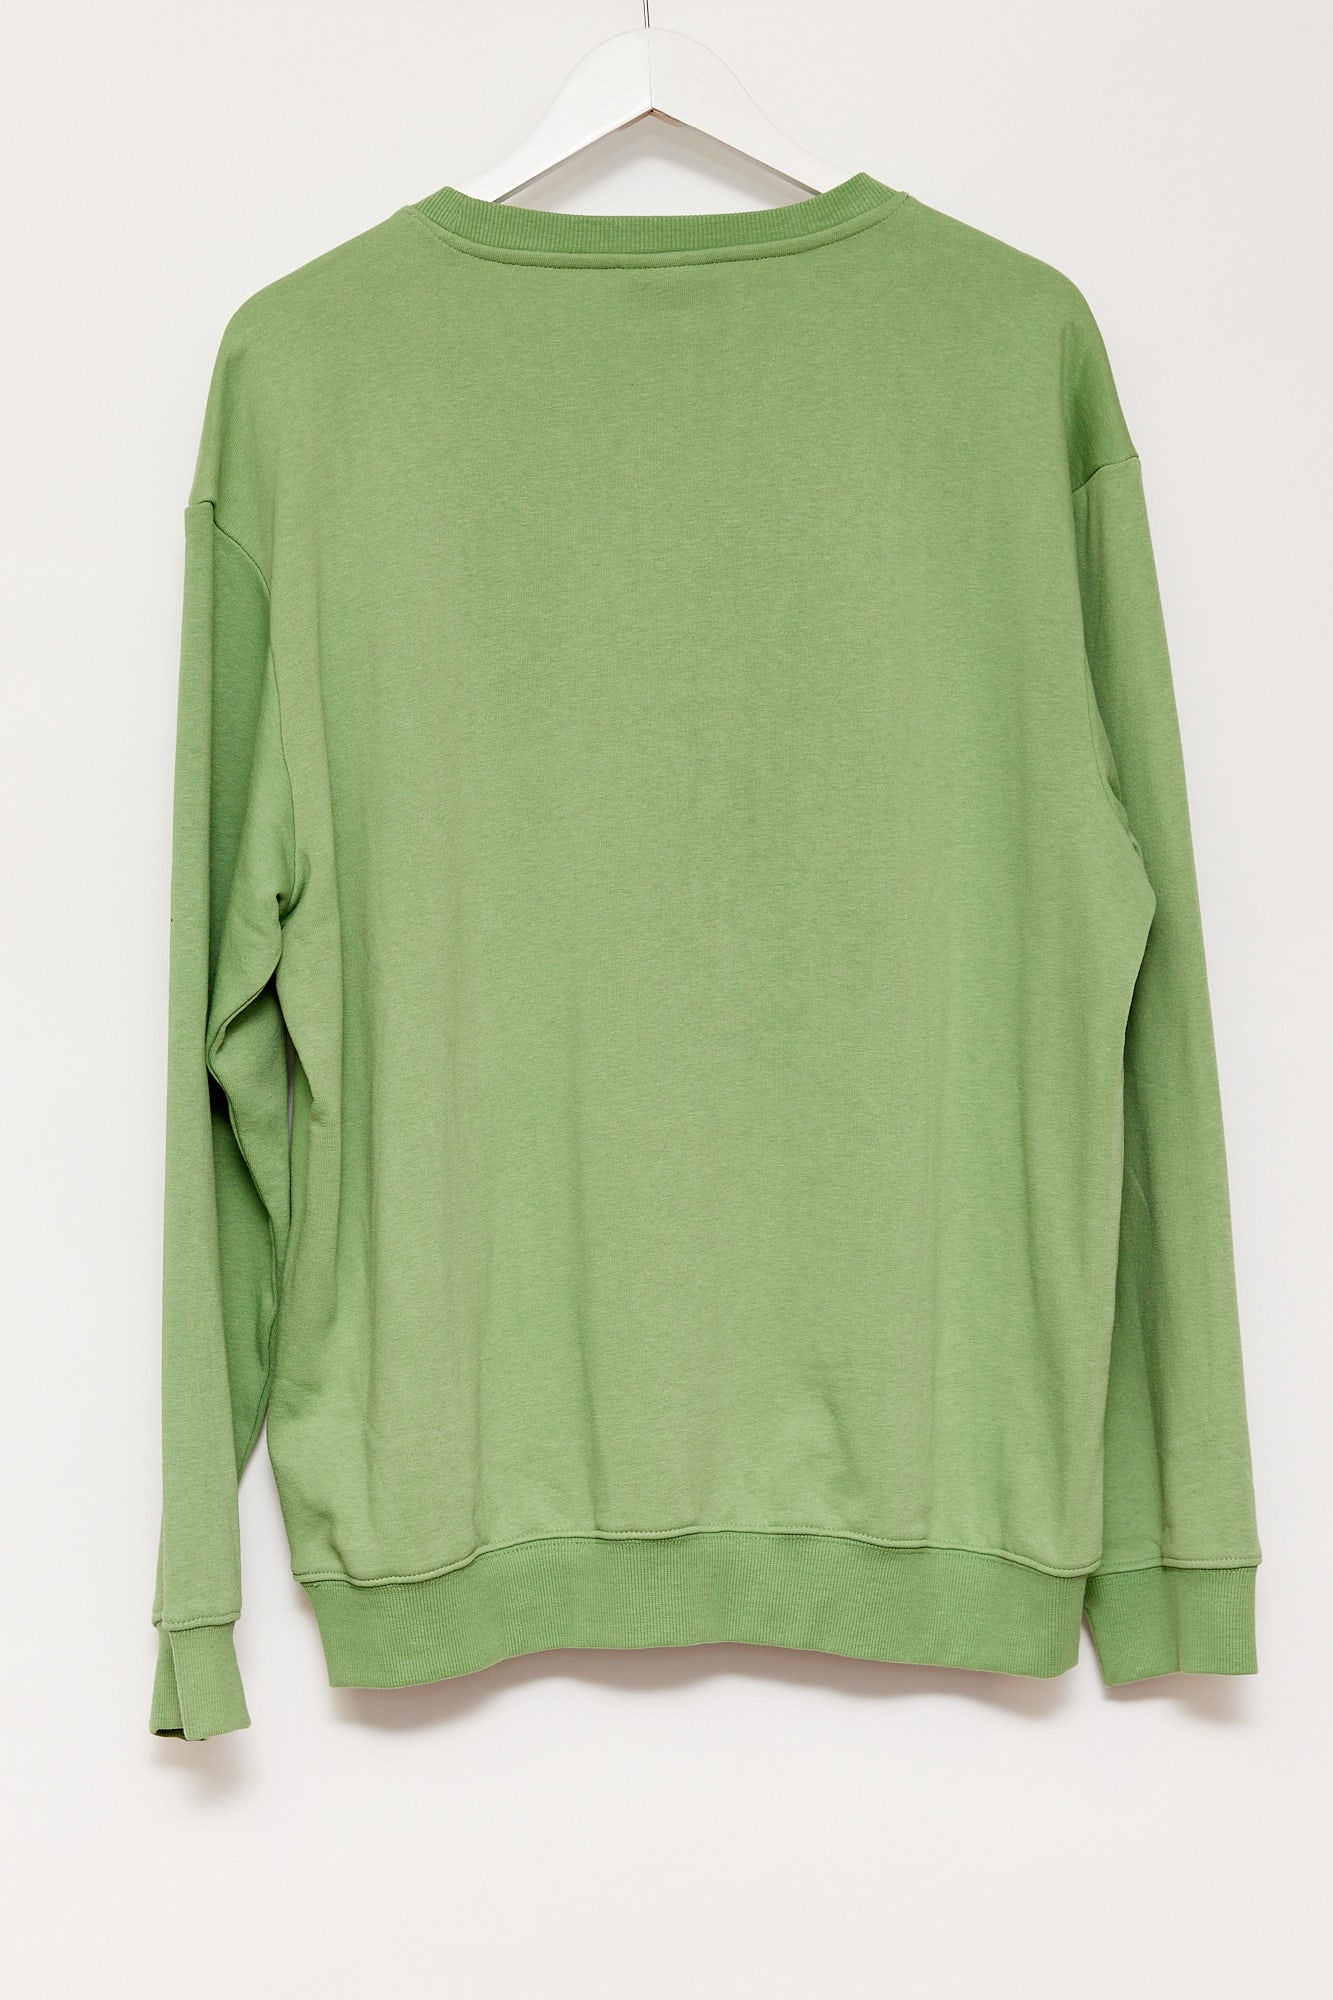 Mens H&M Green sweatshirt size medium